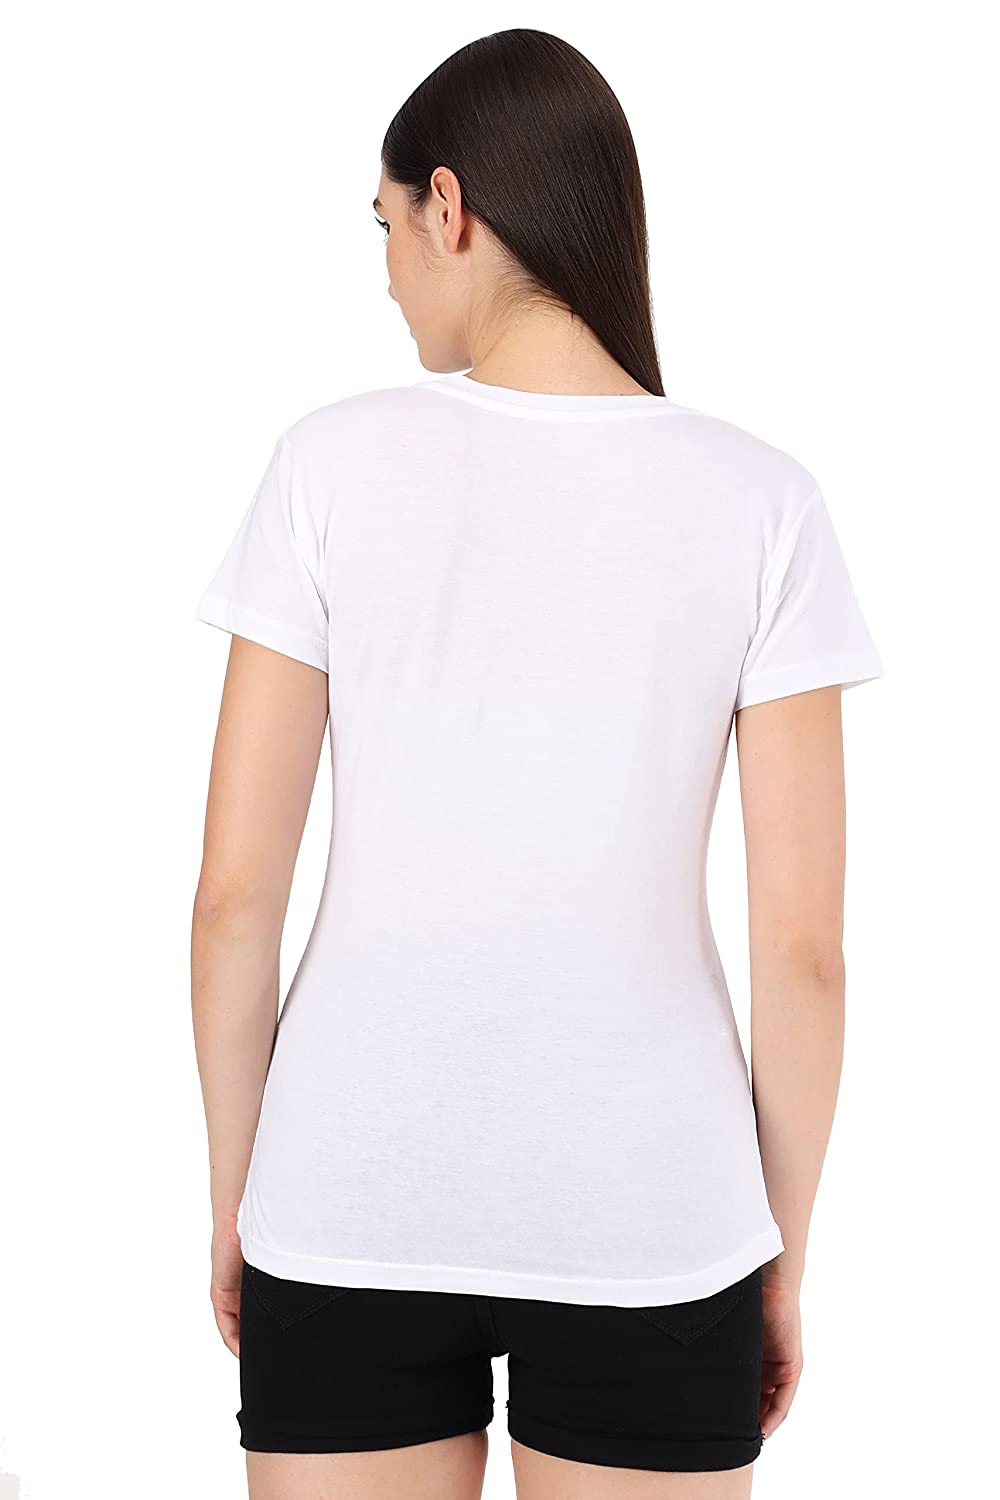 Fflirtygo Women's Cotton Patrotic Series Printed Stylish T-Shirt for Women Casual Wear/Sportswear Vande Mataram Printed T-Shirt